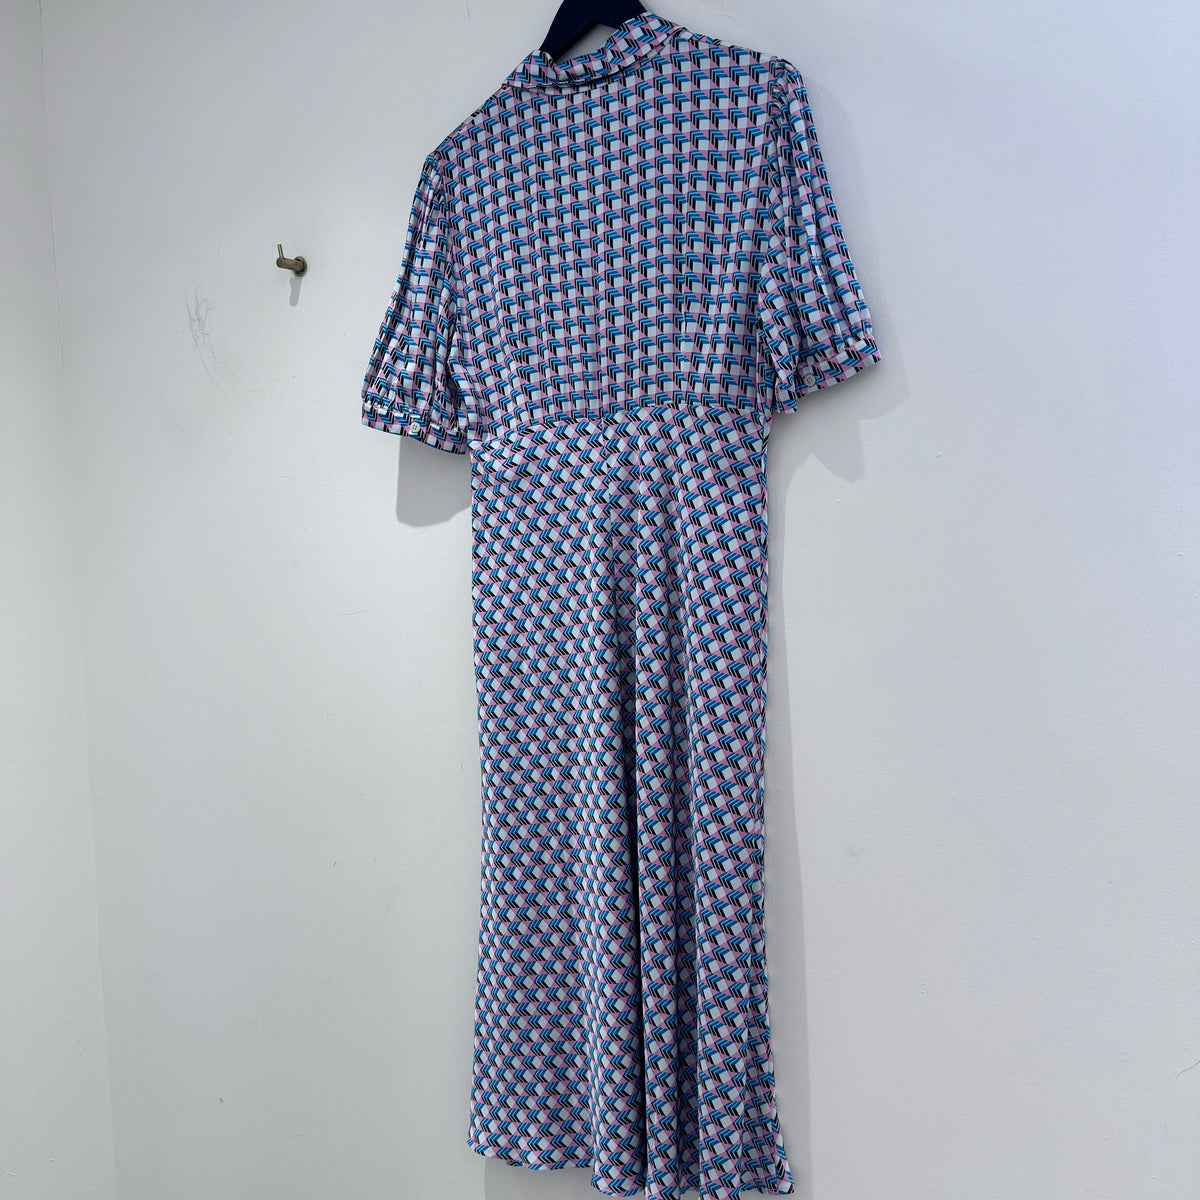 Finery print dress Choc/blue/pink 14